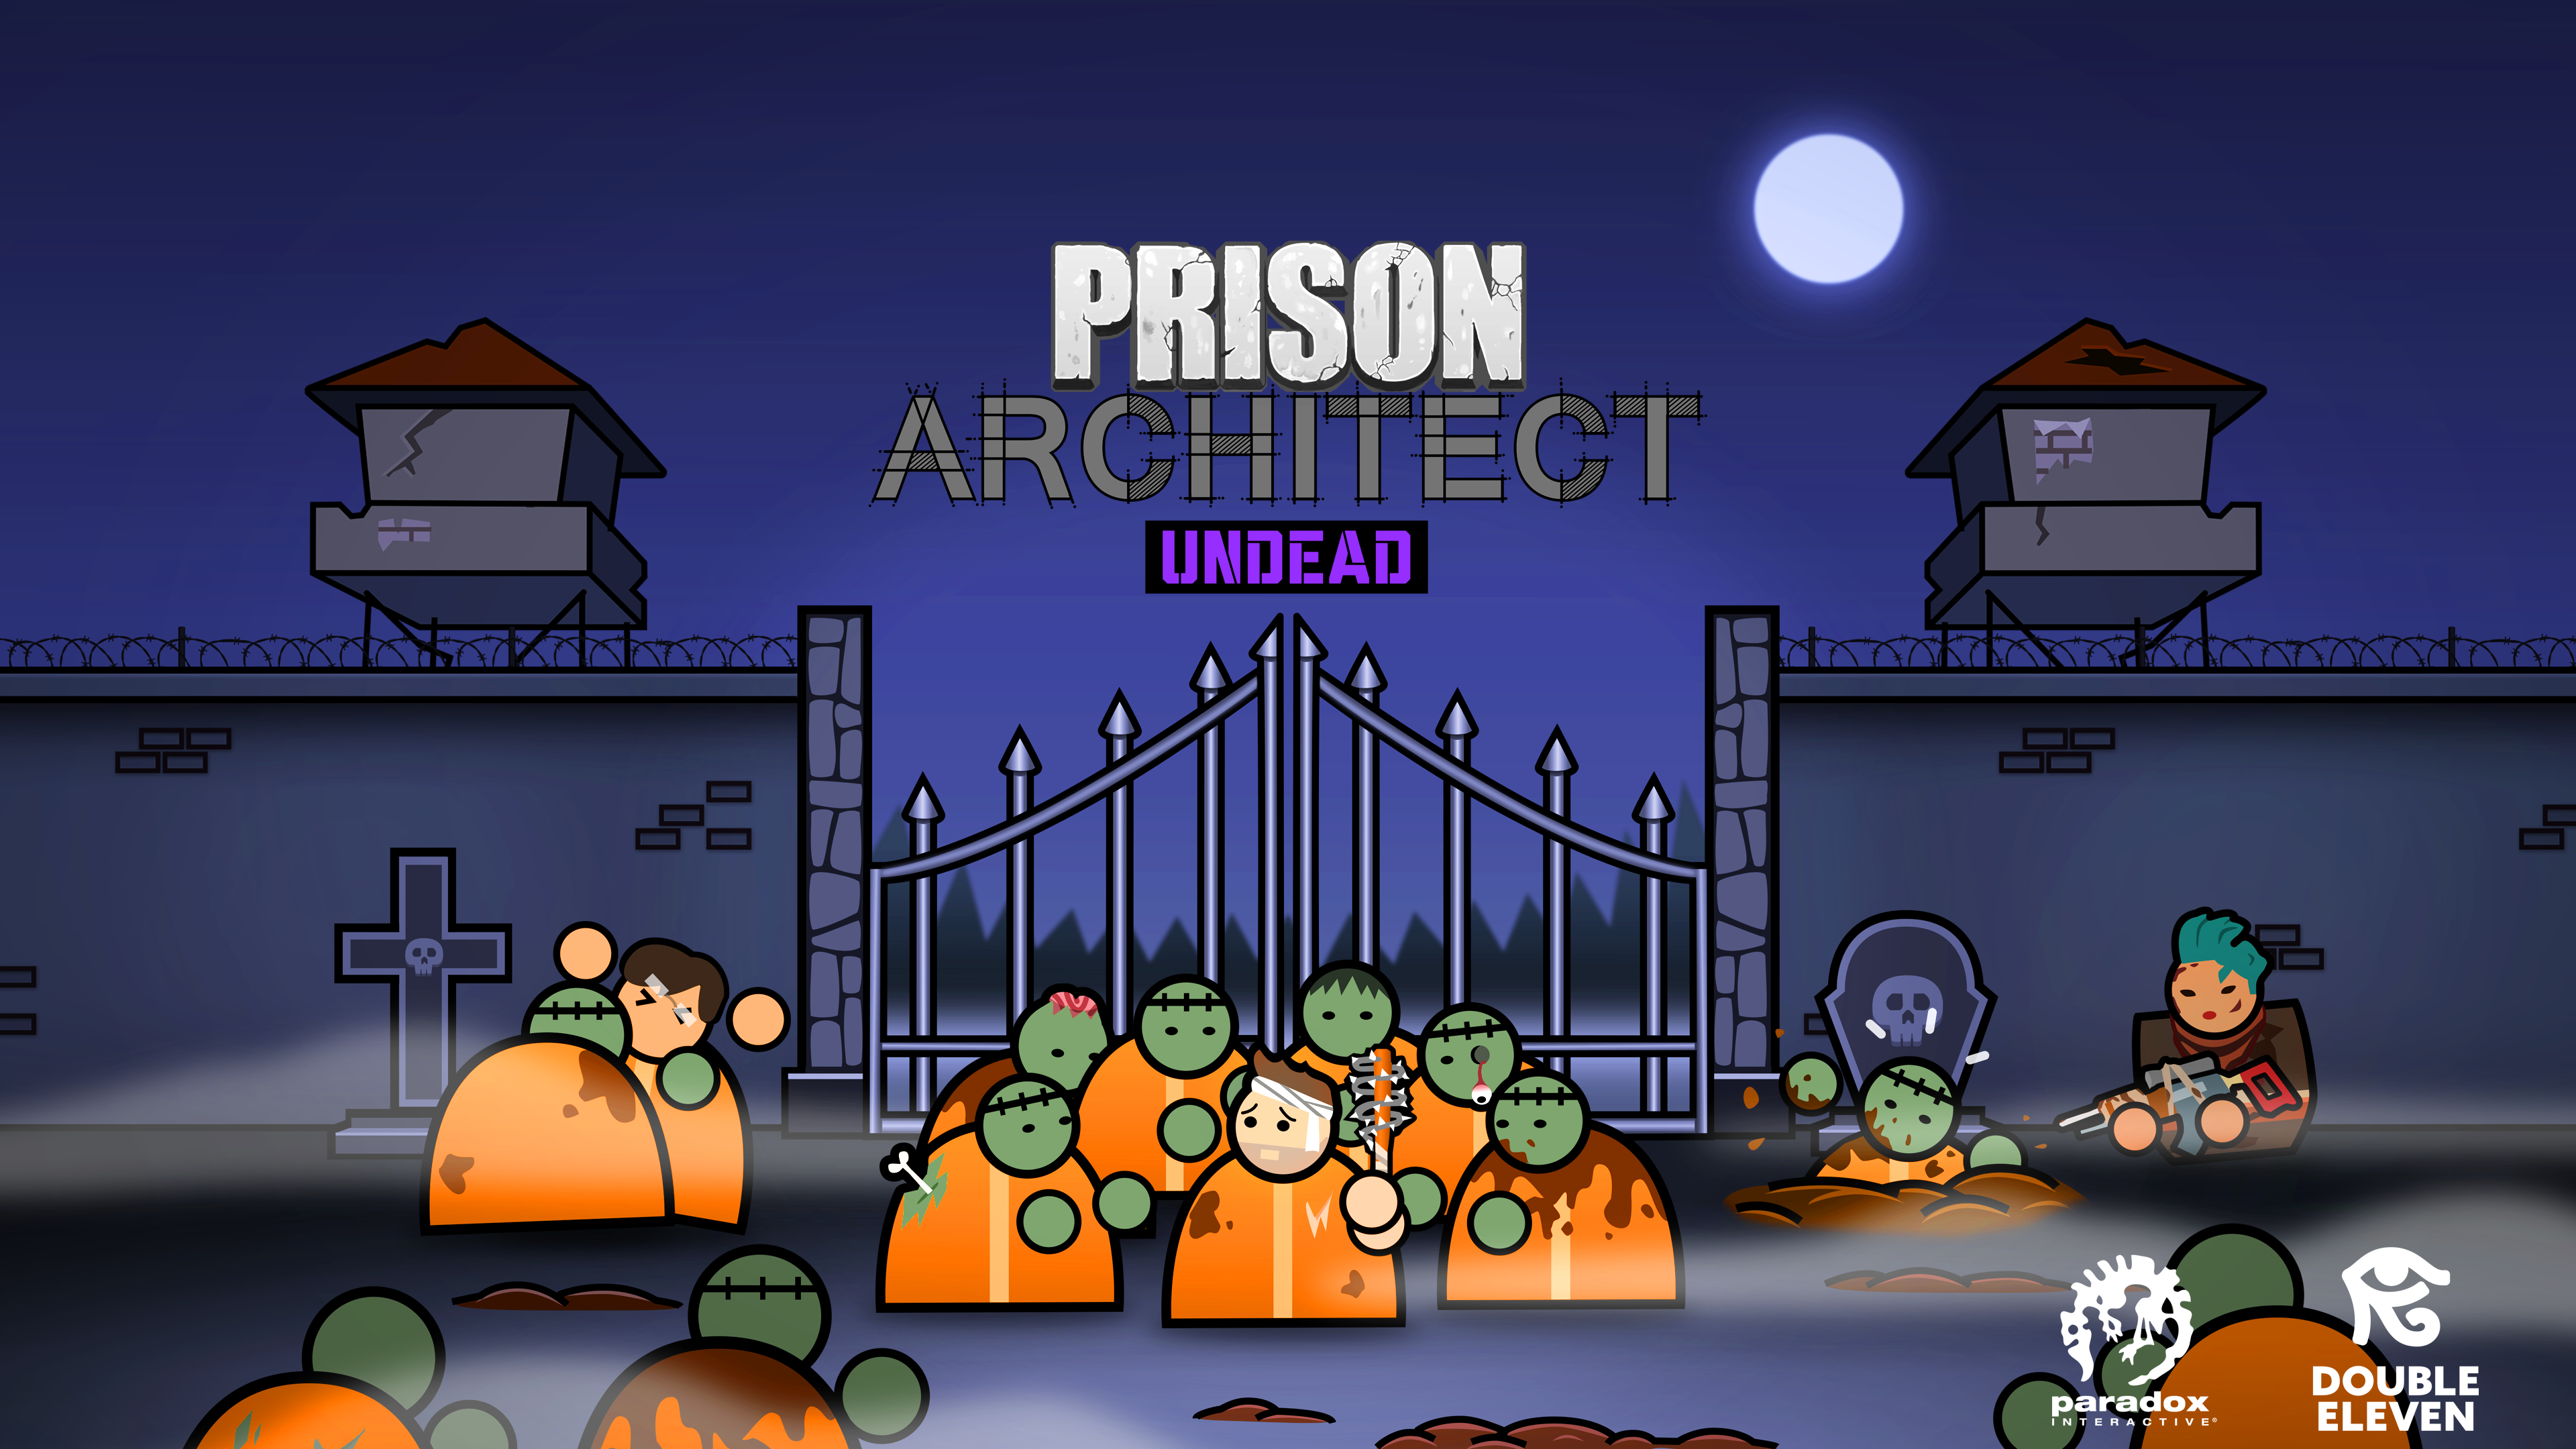 Image for Prison Architect's spooky next expansion Undead announced